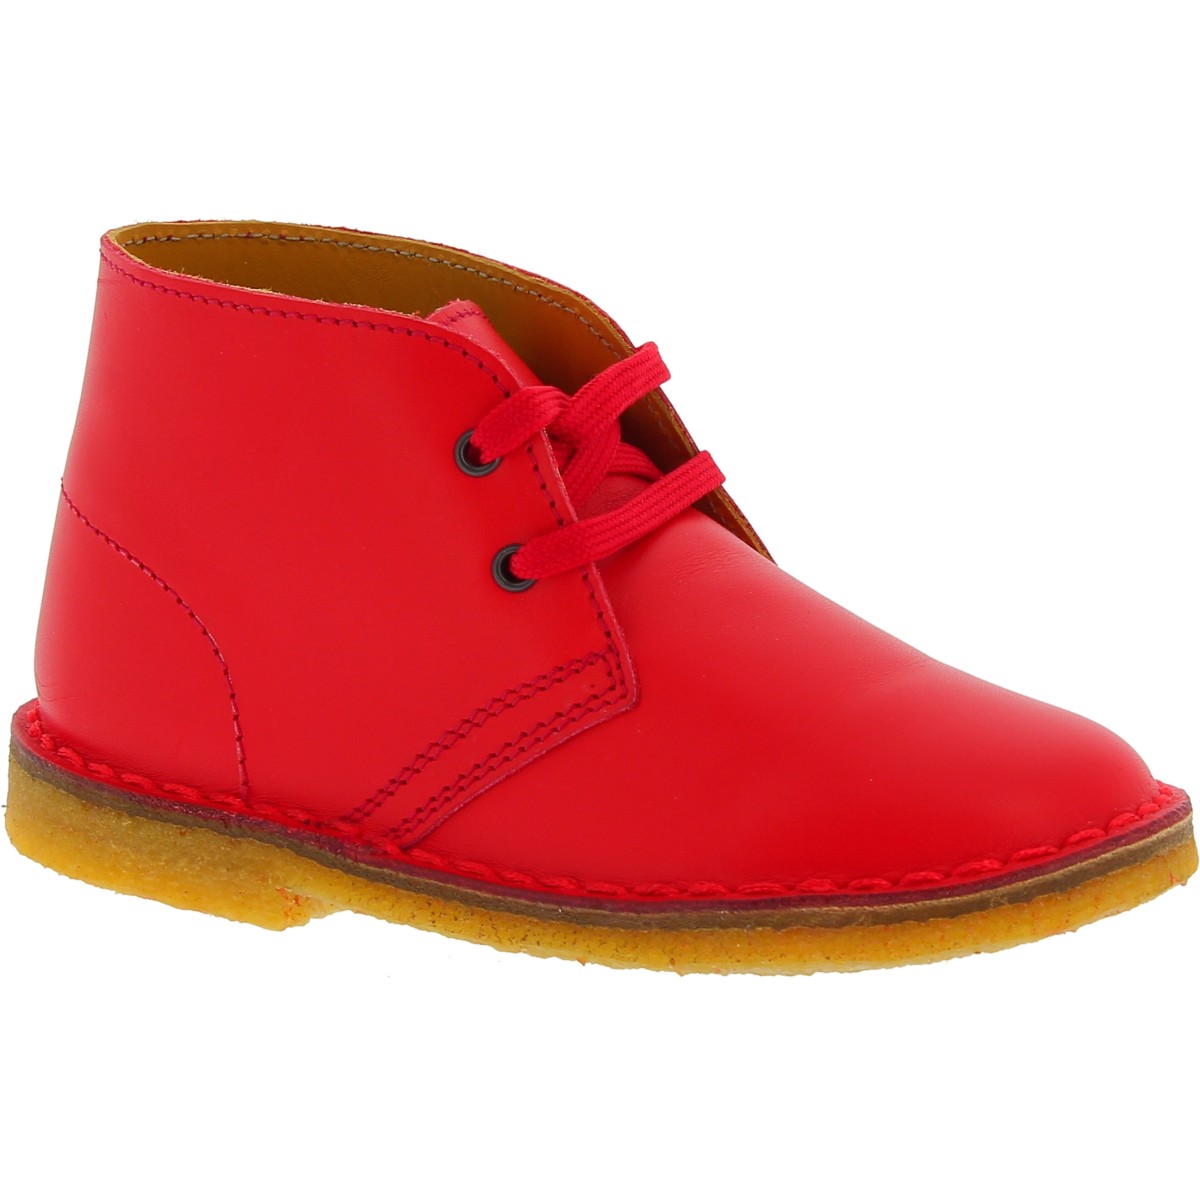 Rote Lederstiefeletten Schuhe Stiefeletten Reißverschluss-Stiefeletten 